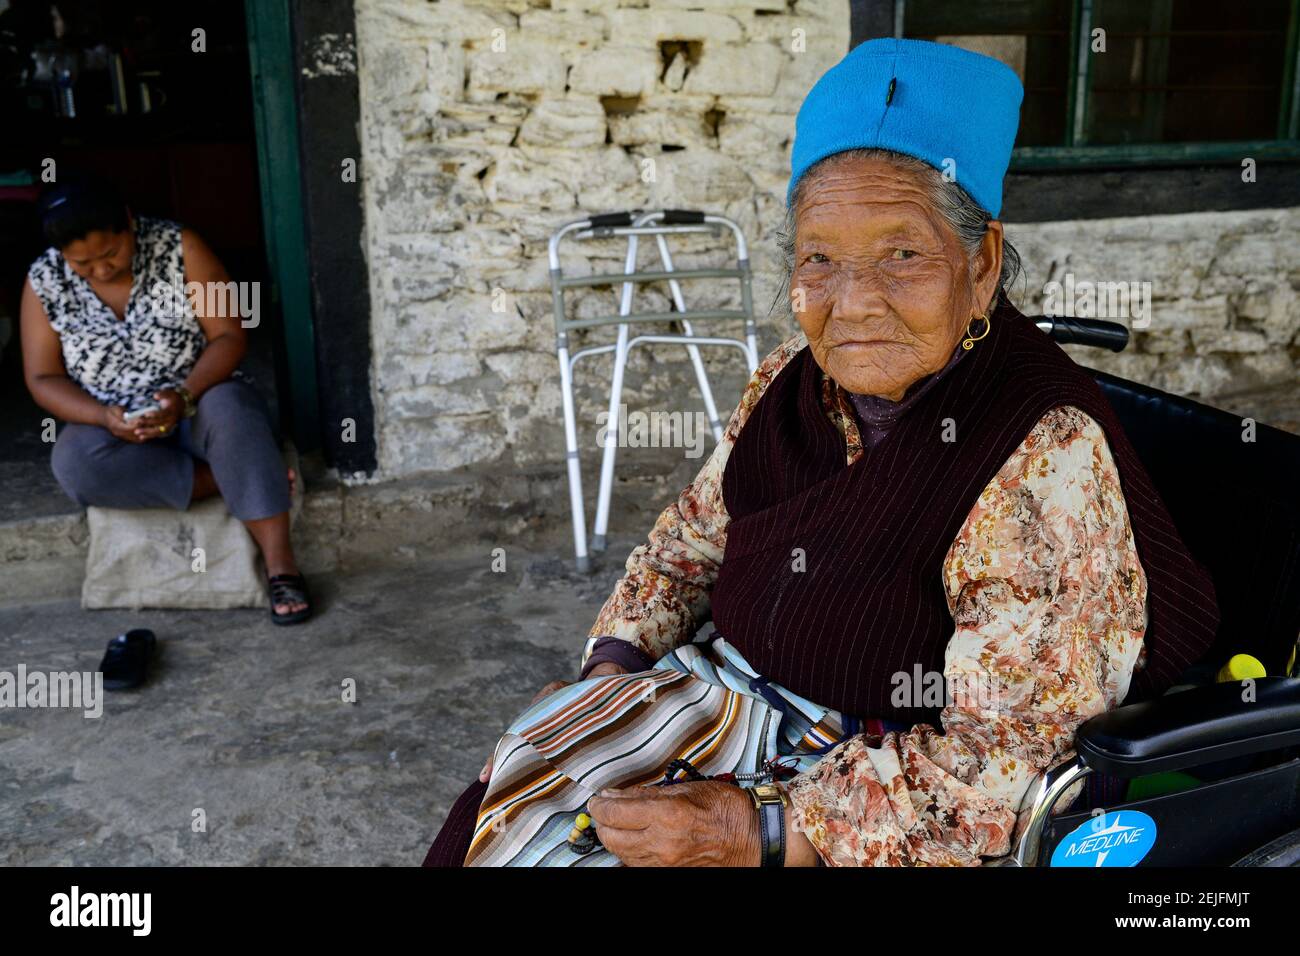 NEPAL Pokhara, campo profughi tibetano, vecchia donna con collana in preghiera in sedia a rotelle / tibetisches Fluechtlingslager Prithivi, alte Tibeterin bei einem Gebet mit Gebetskette im Rollstuhl Foto Stock